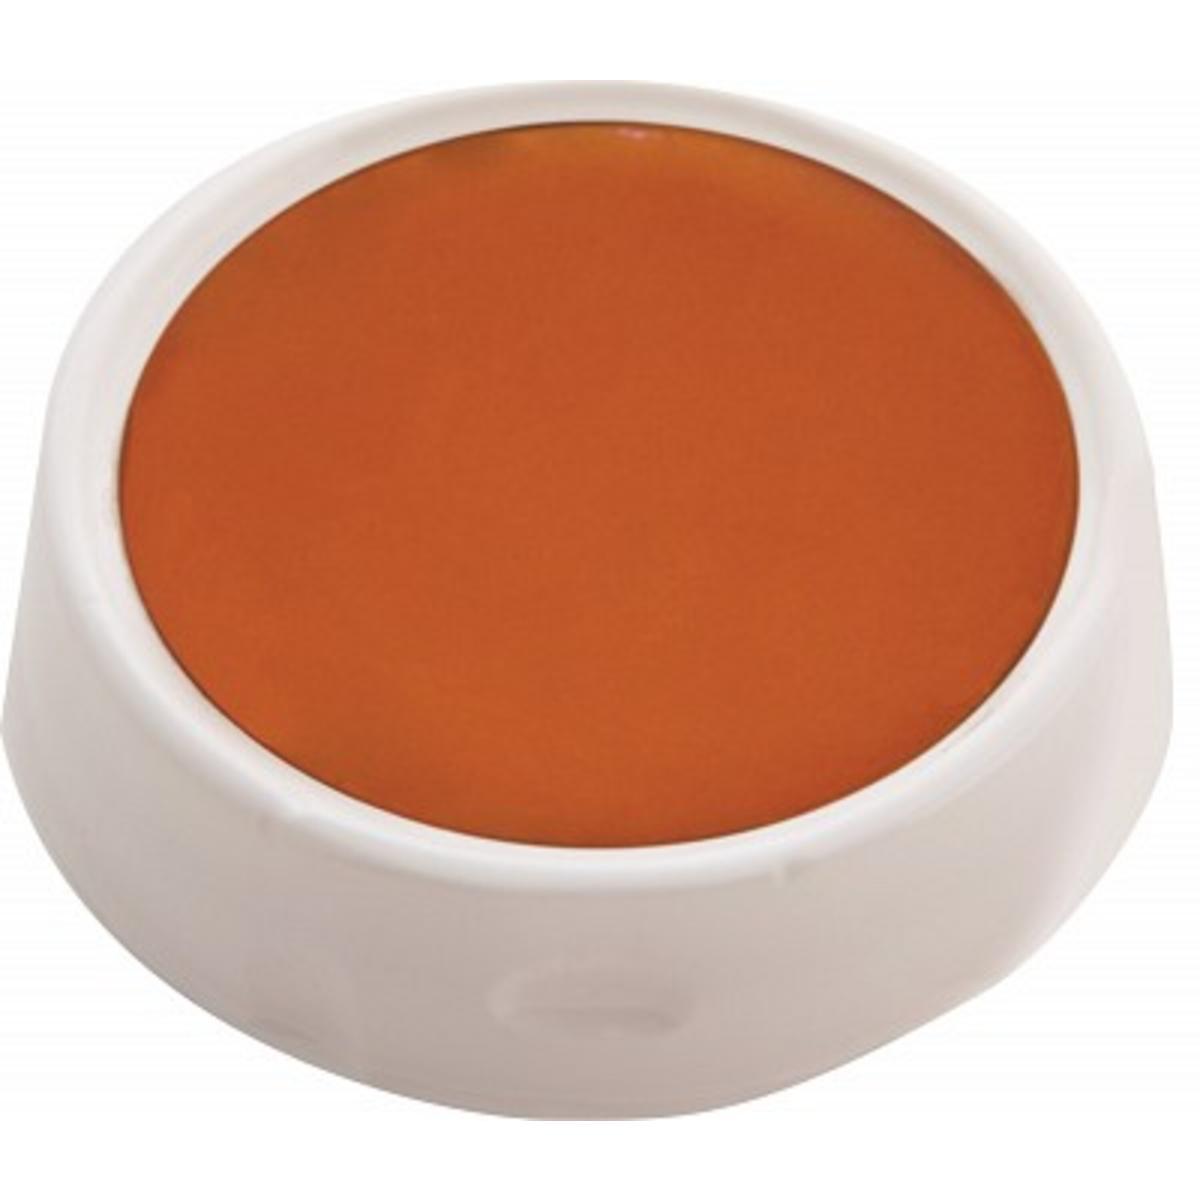 Palette ronde en fard gras - 6,5 x 6,5 cm - Orange